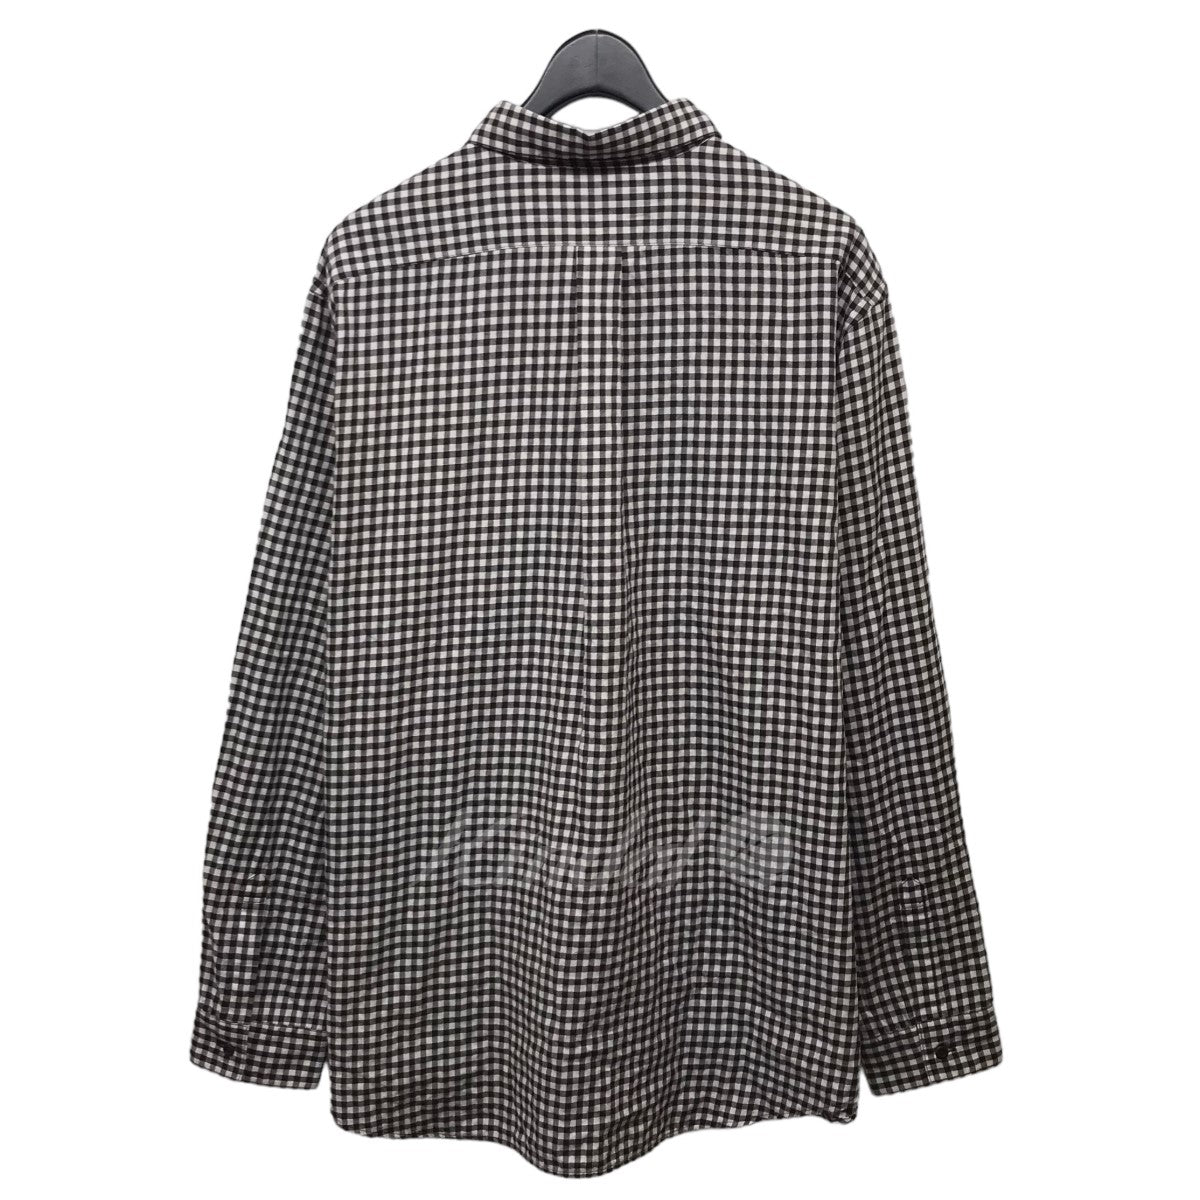 nanamica(ナナミカ) 「Regular Collar Wind Shirt」ギンガムチェック 